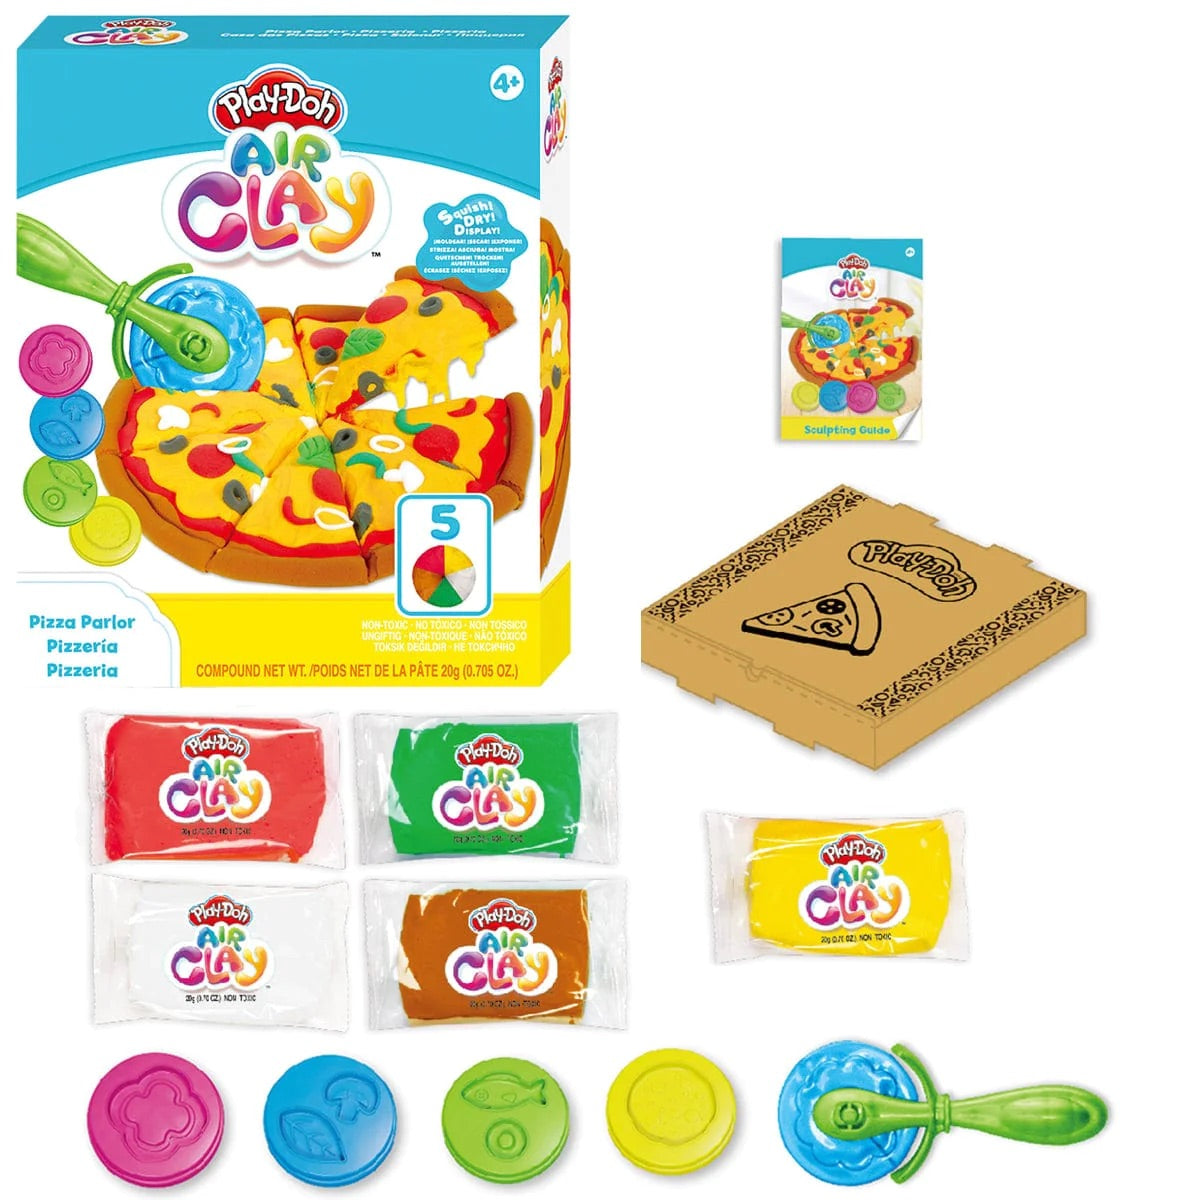 Play-Doh - Air Clay Pizza Parlor